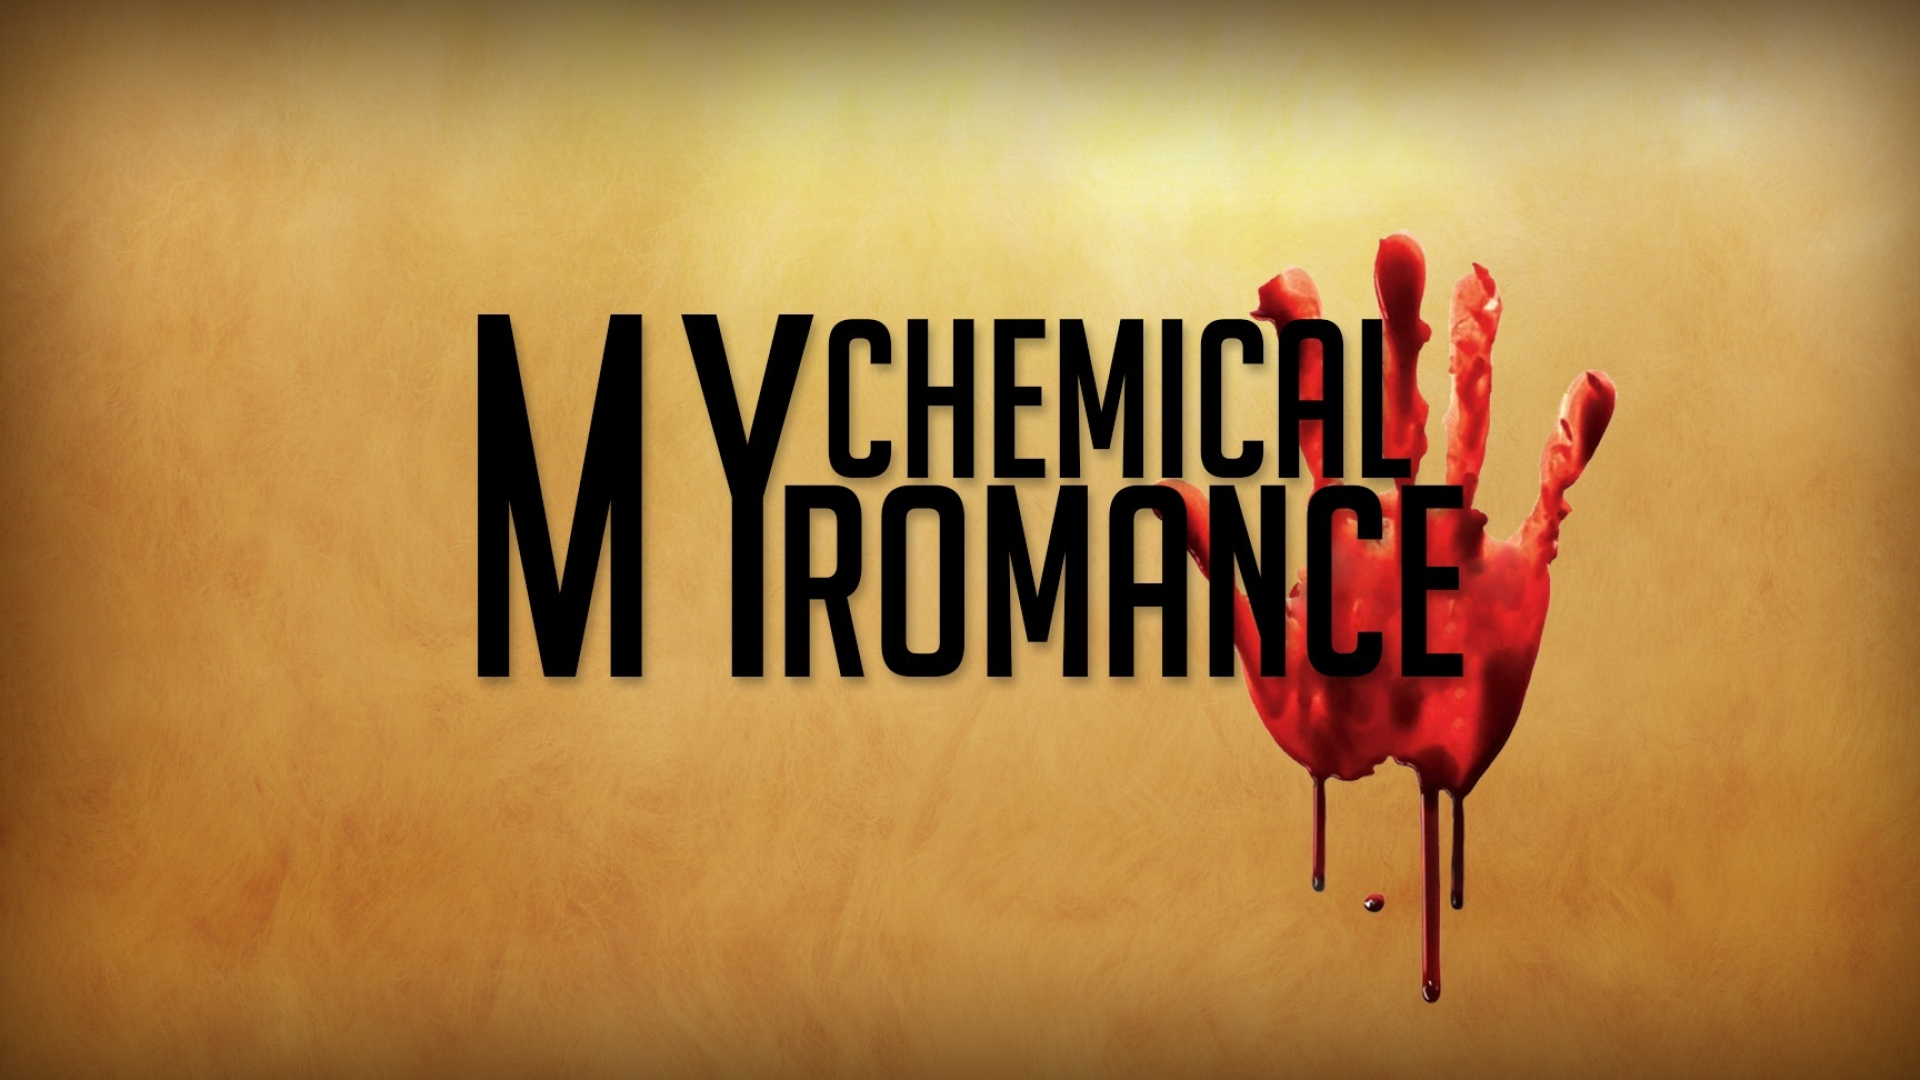 MCR (My Chemical Romance), Wallpaper by Samantha Thompson, Personalized artwork, Fan creativity, 1920x1080 Full HD Desktop